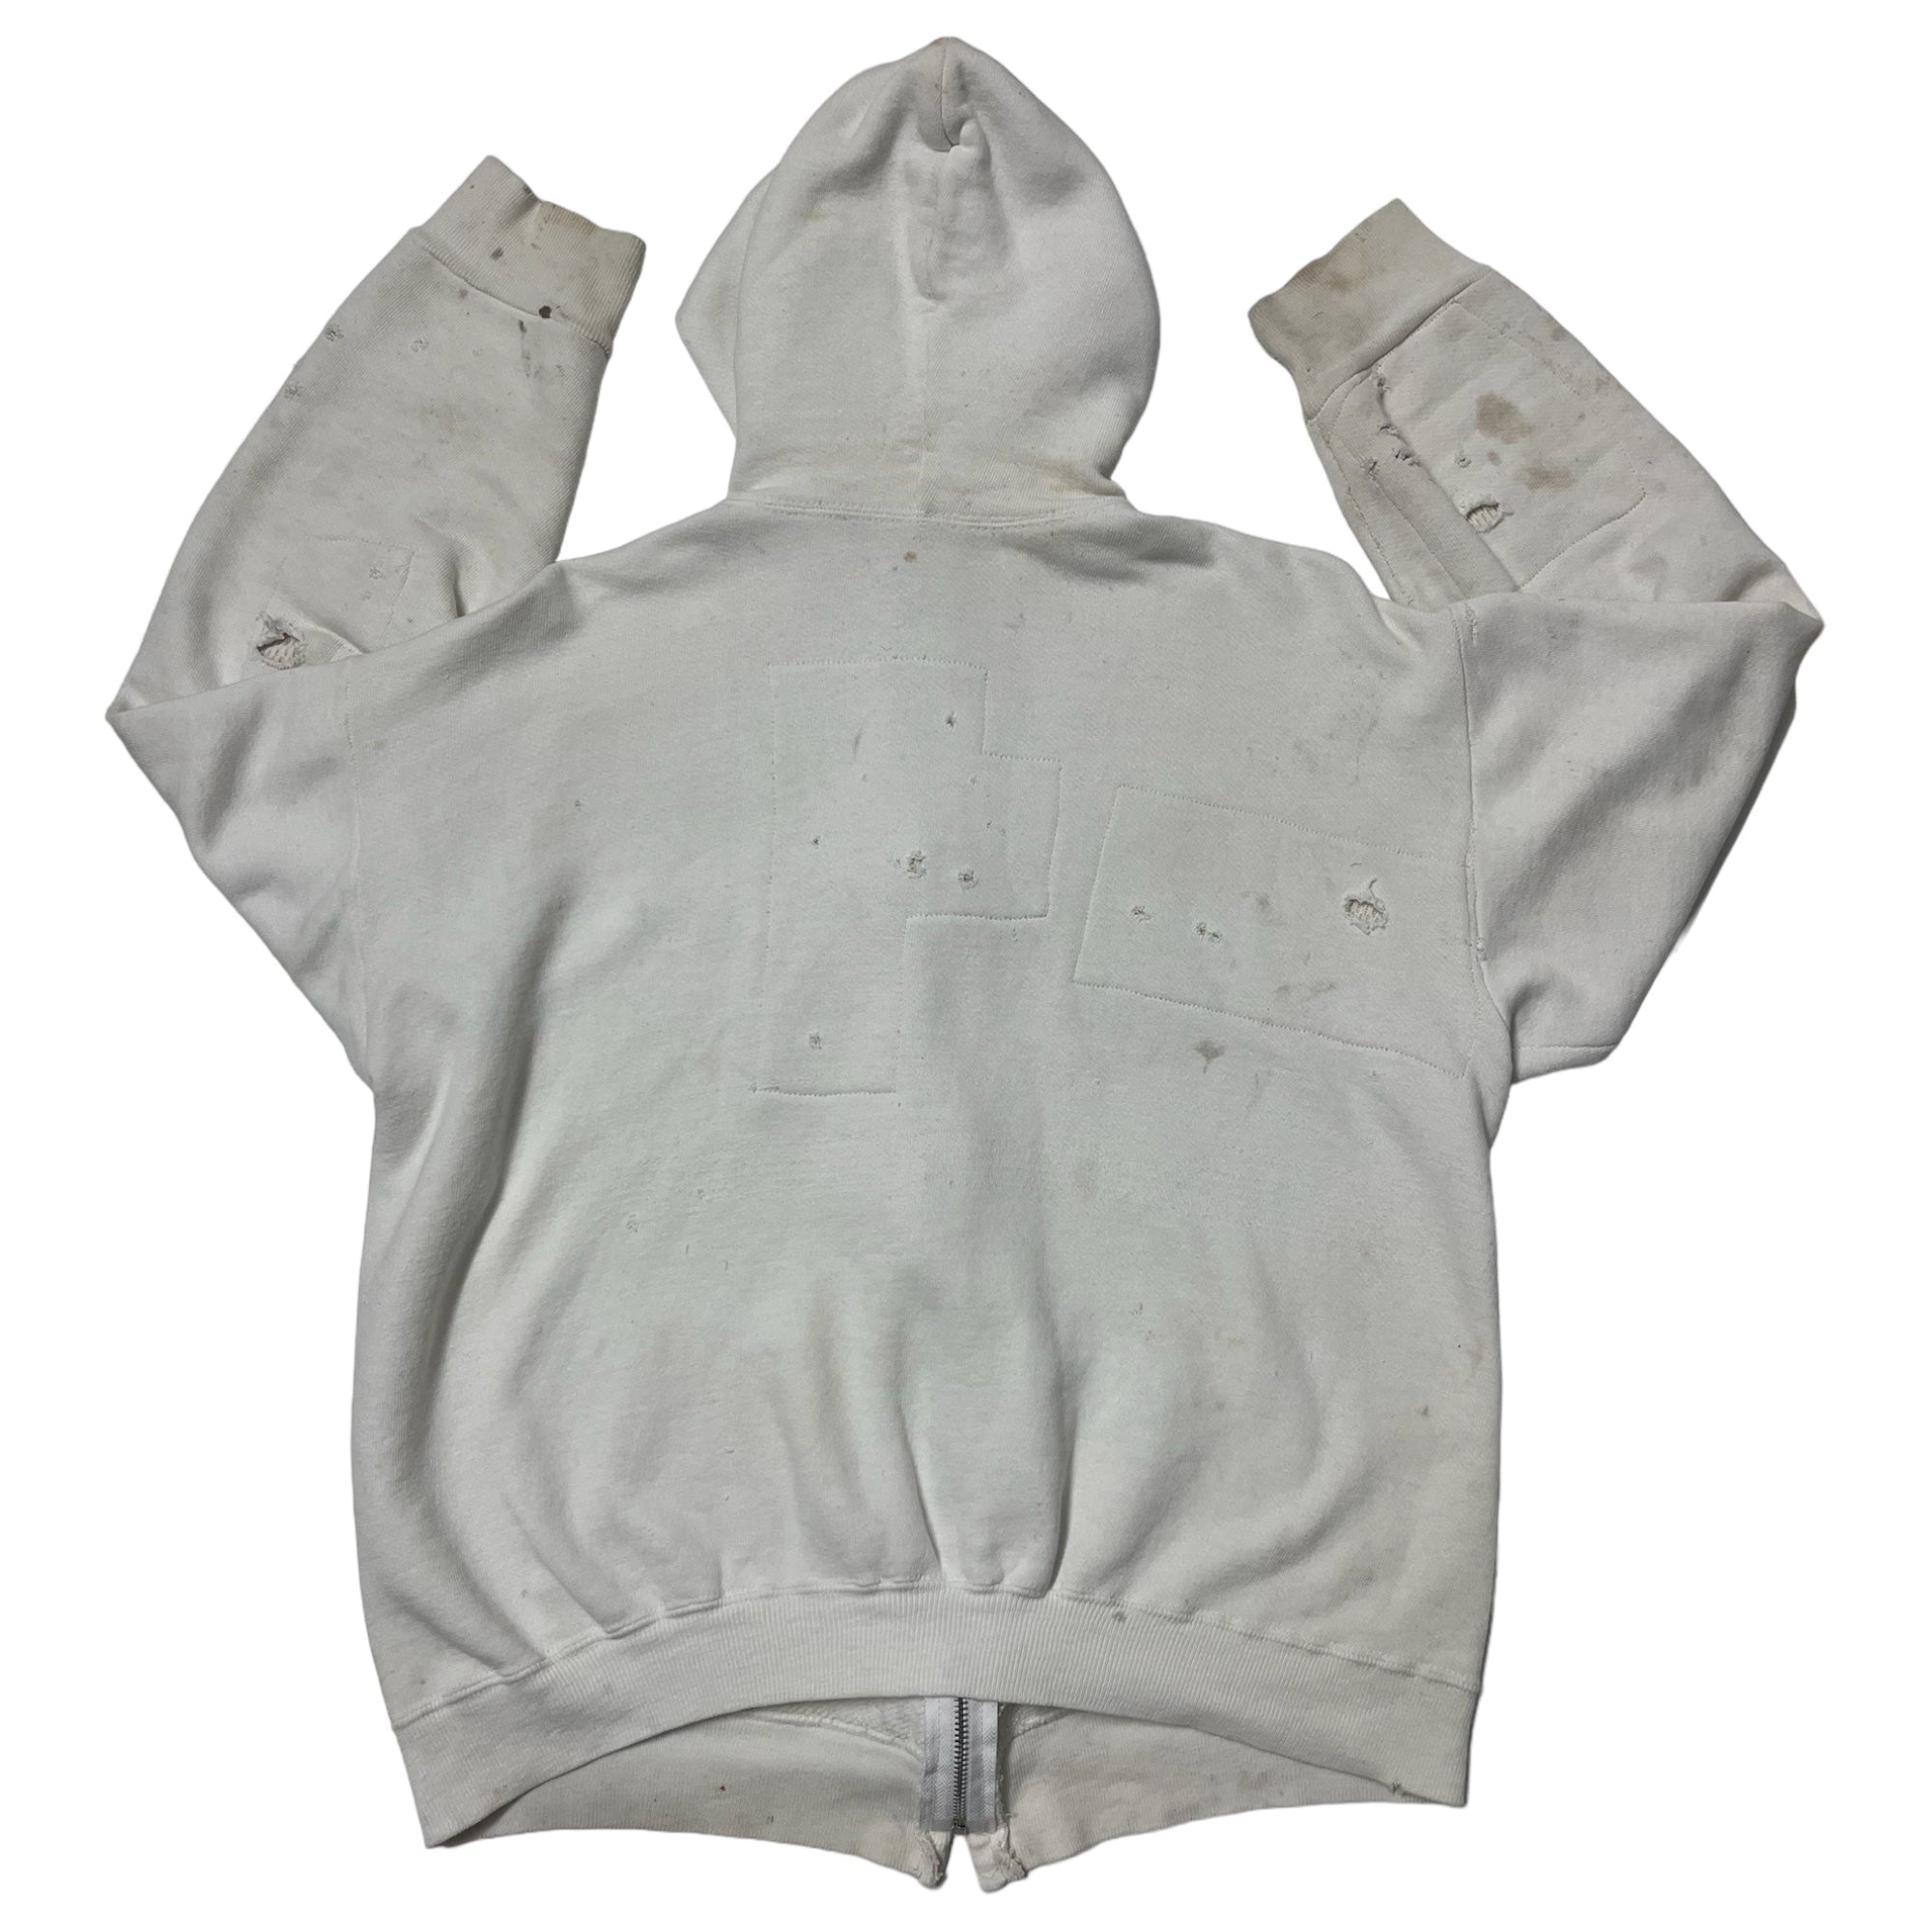 1970s Distressed & Repaired Zip-Up Hooded Sweatshirt - Aged Ecru/White - S/M